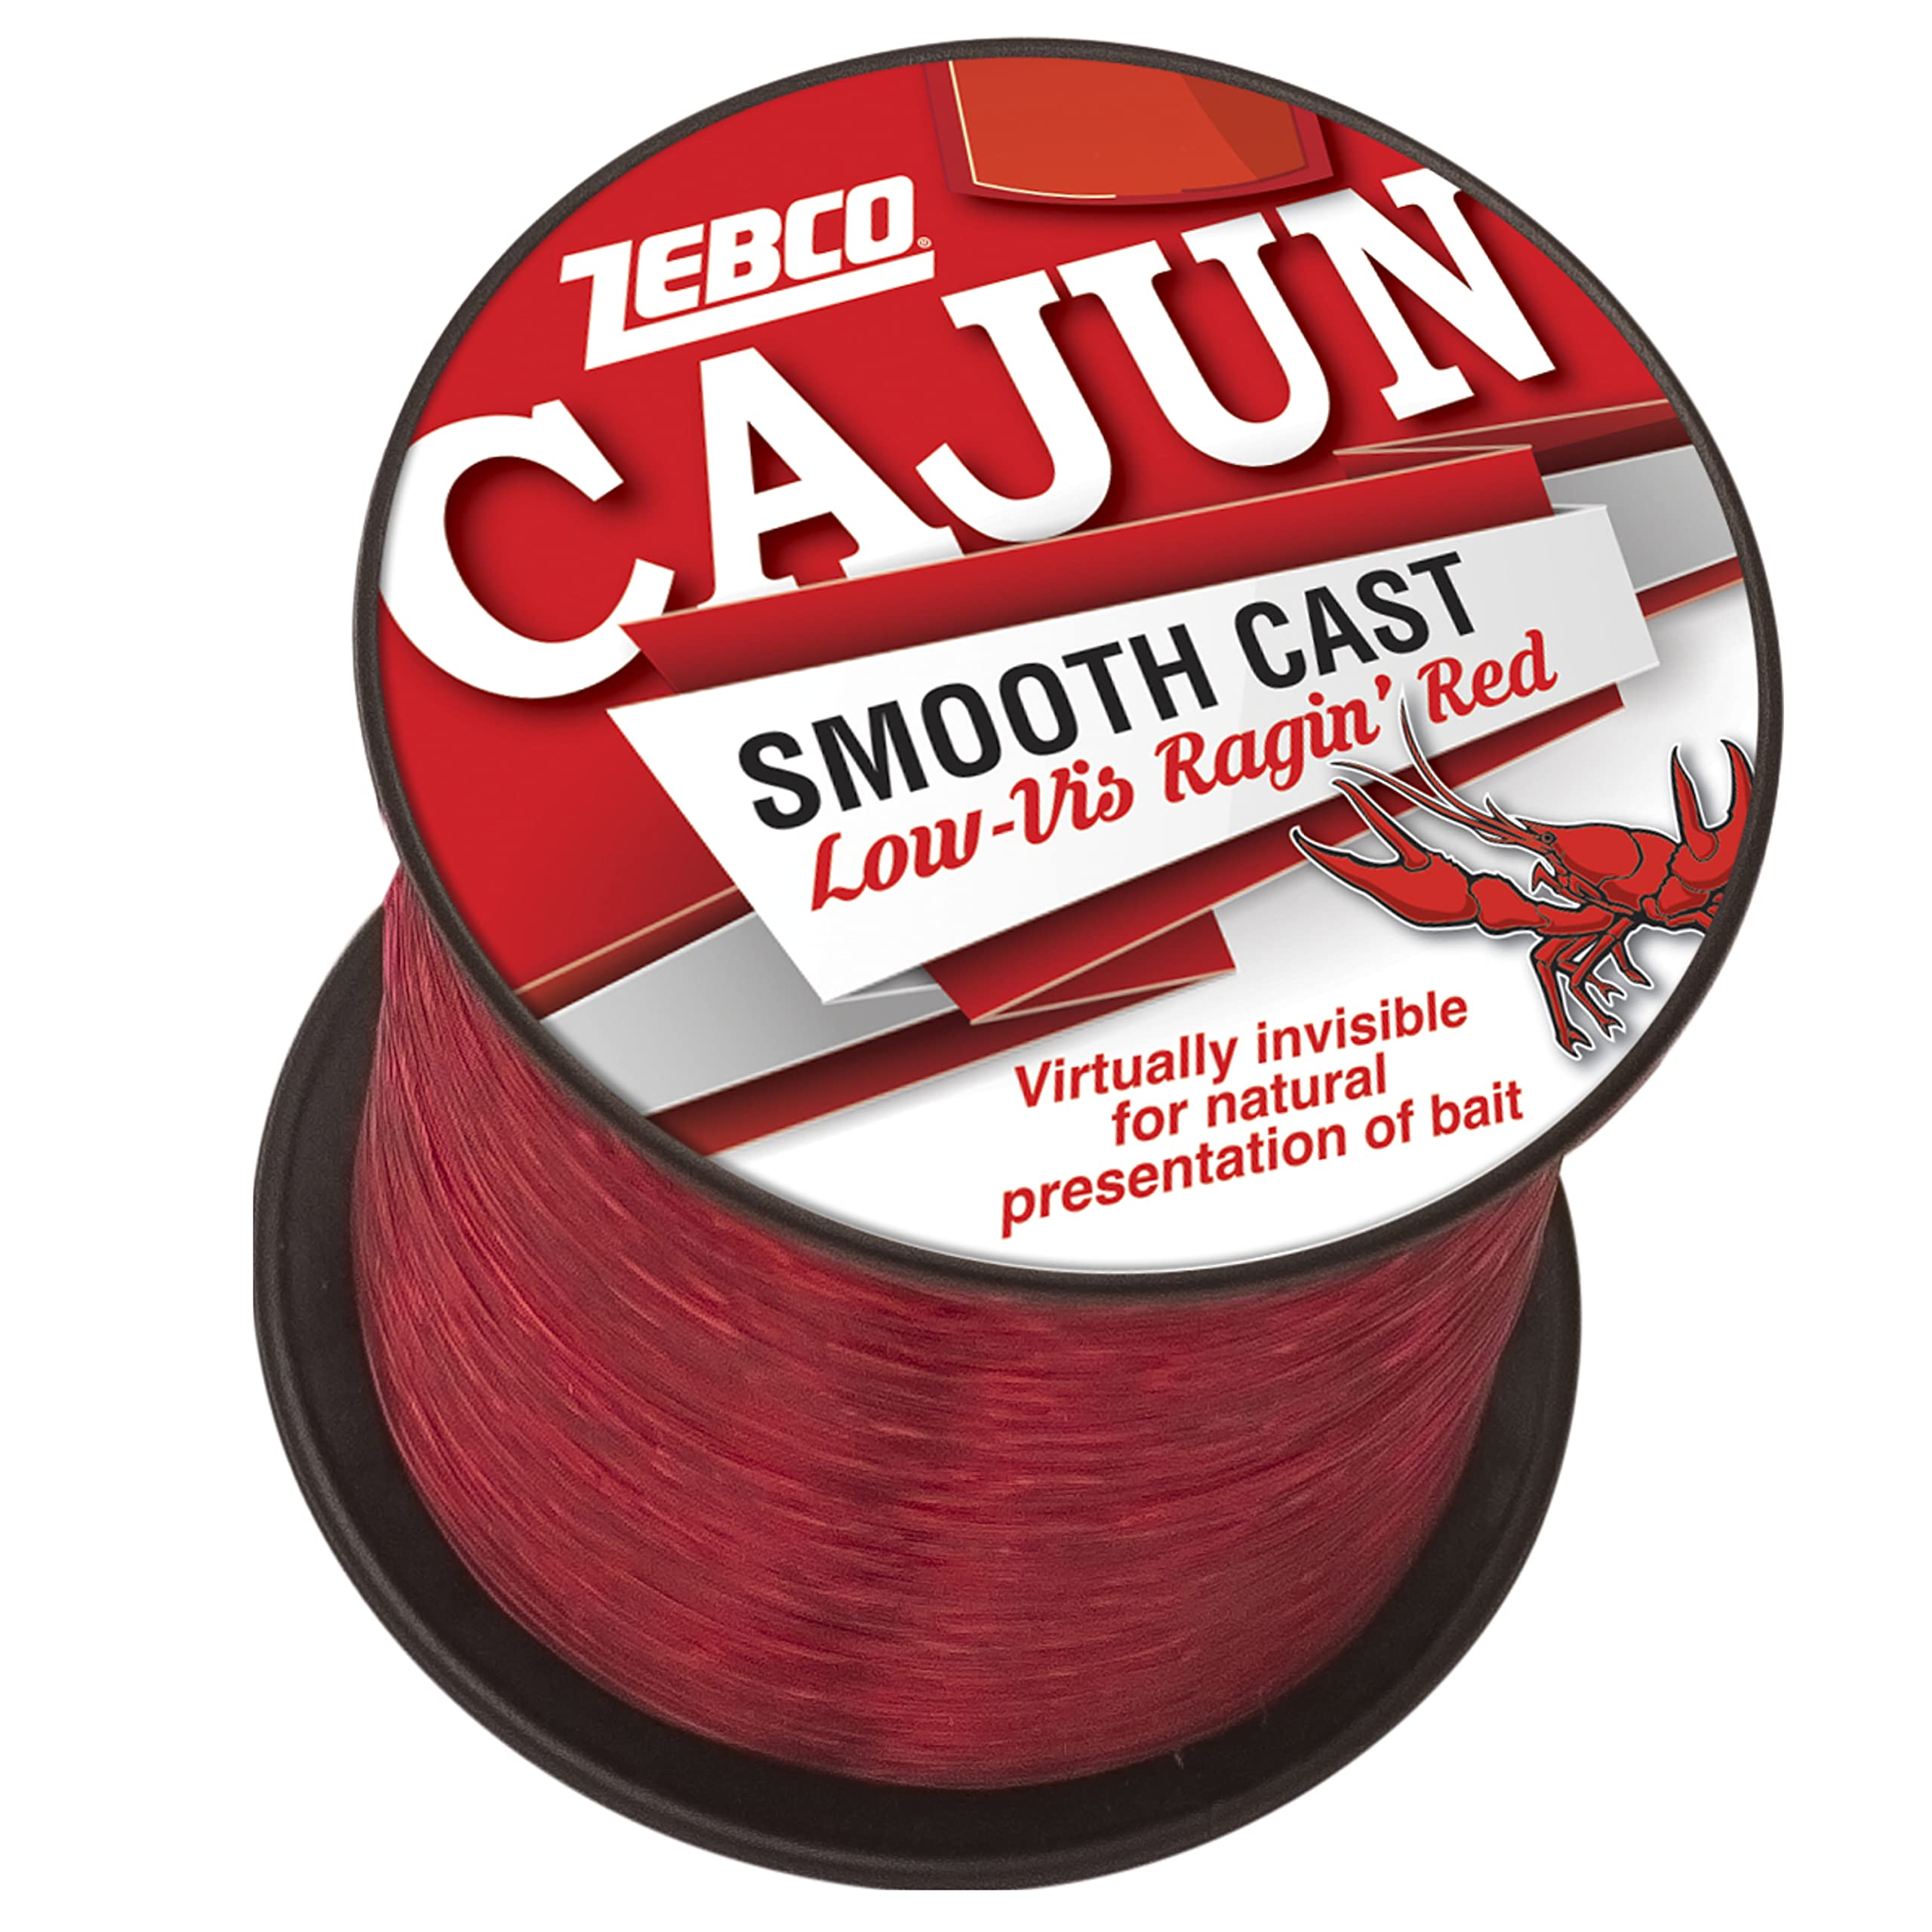 Zebco Cajun Line Smooth Cast Fishing Line Low Vis Ragin Red